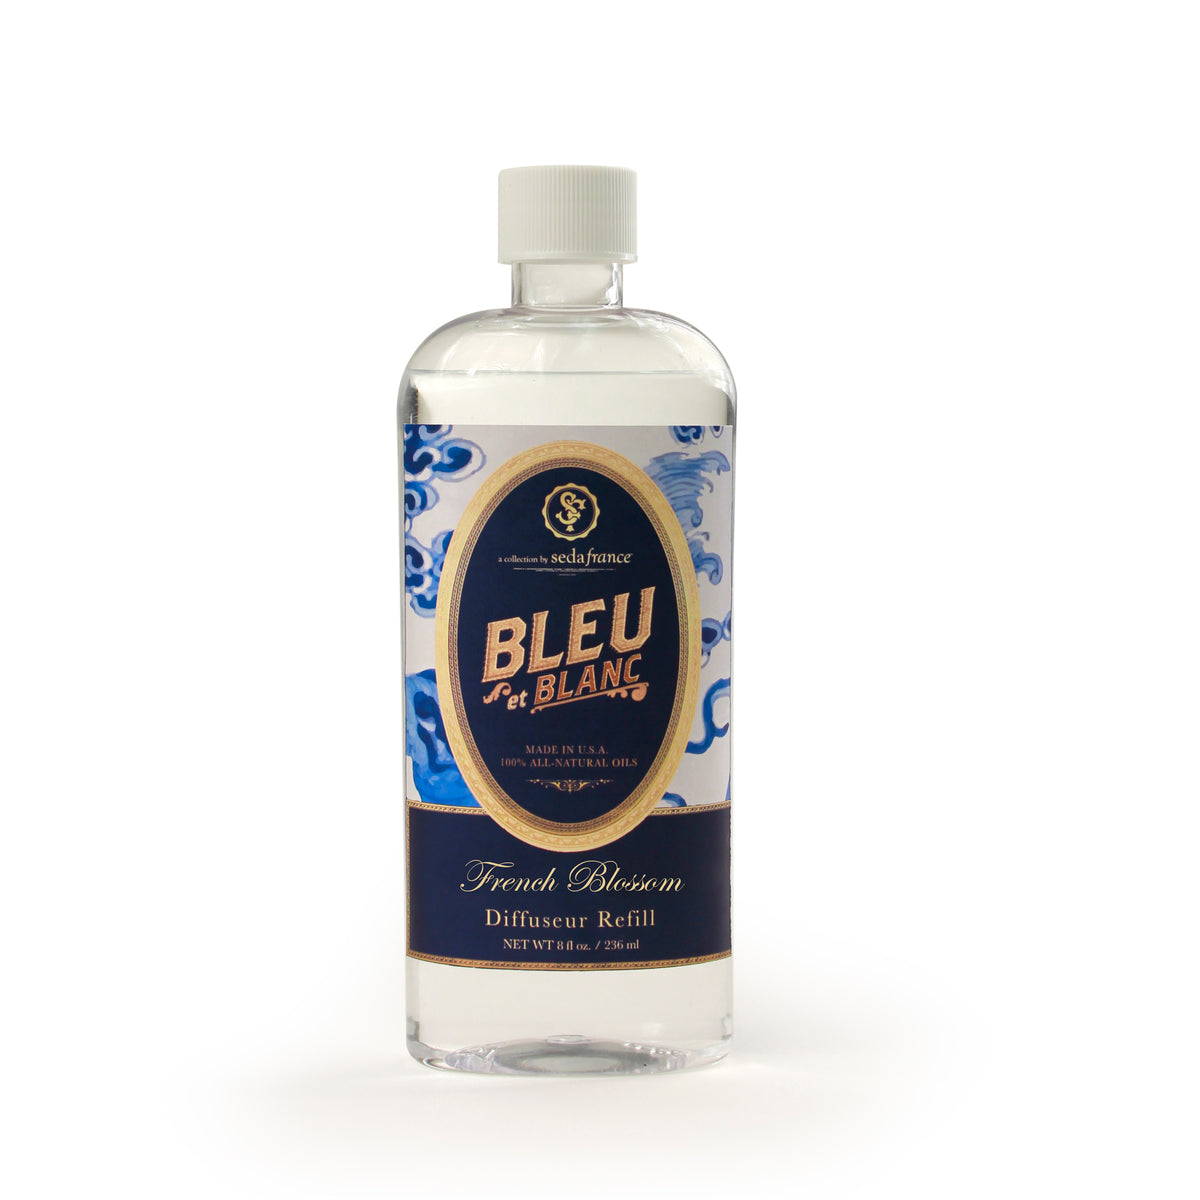 French Blossom Bleu et Blanc Diffuseur Refill